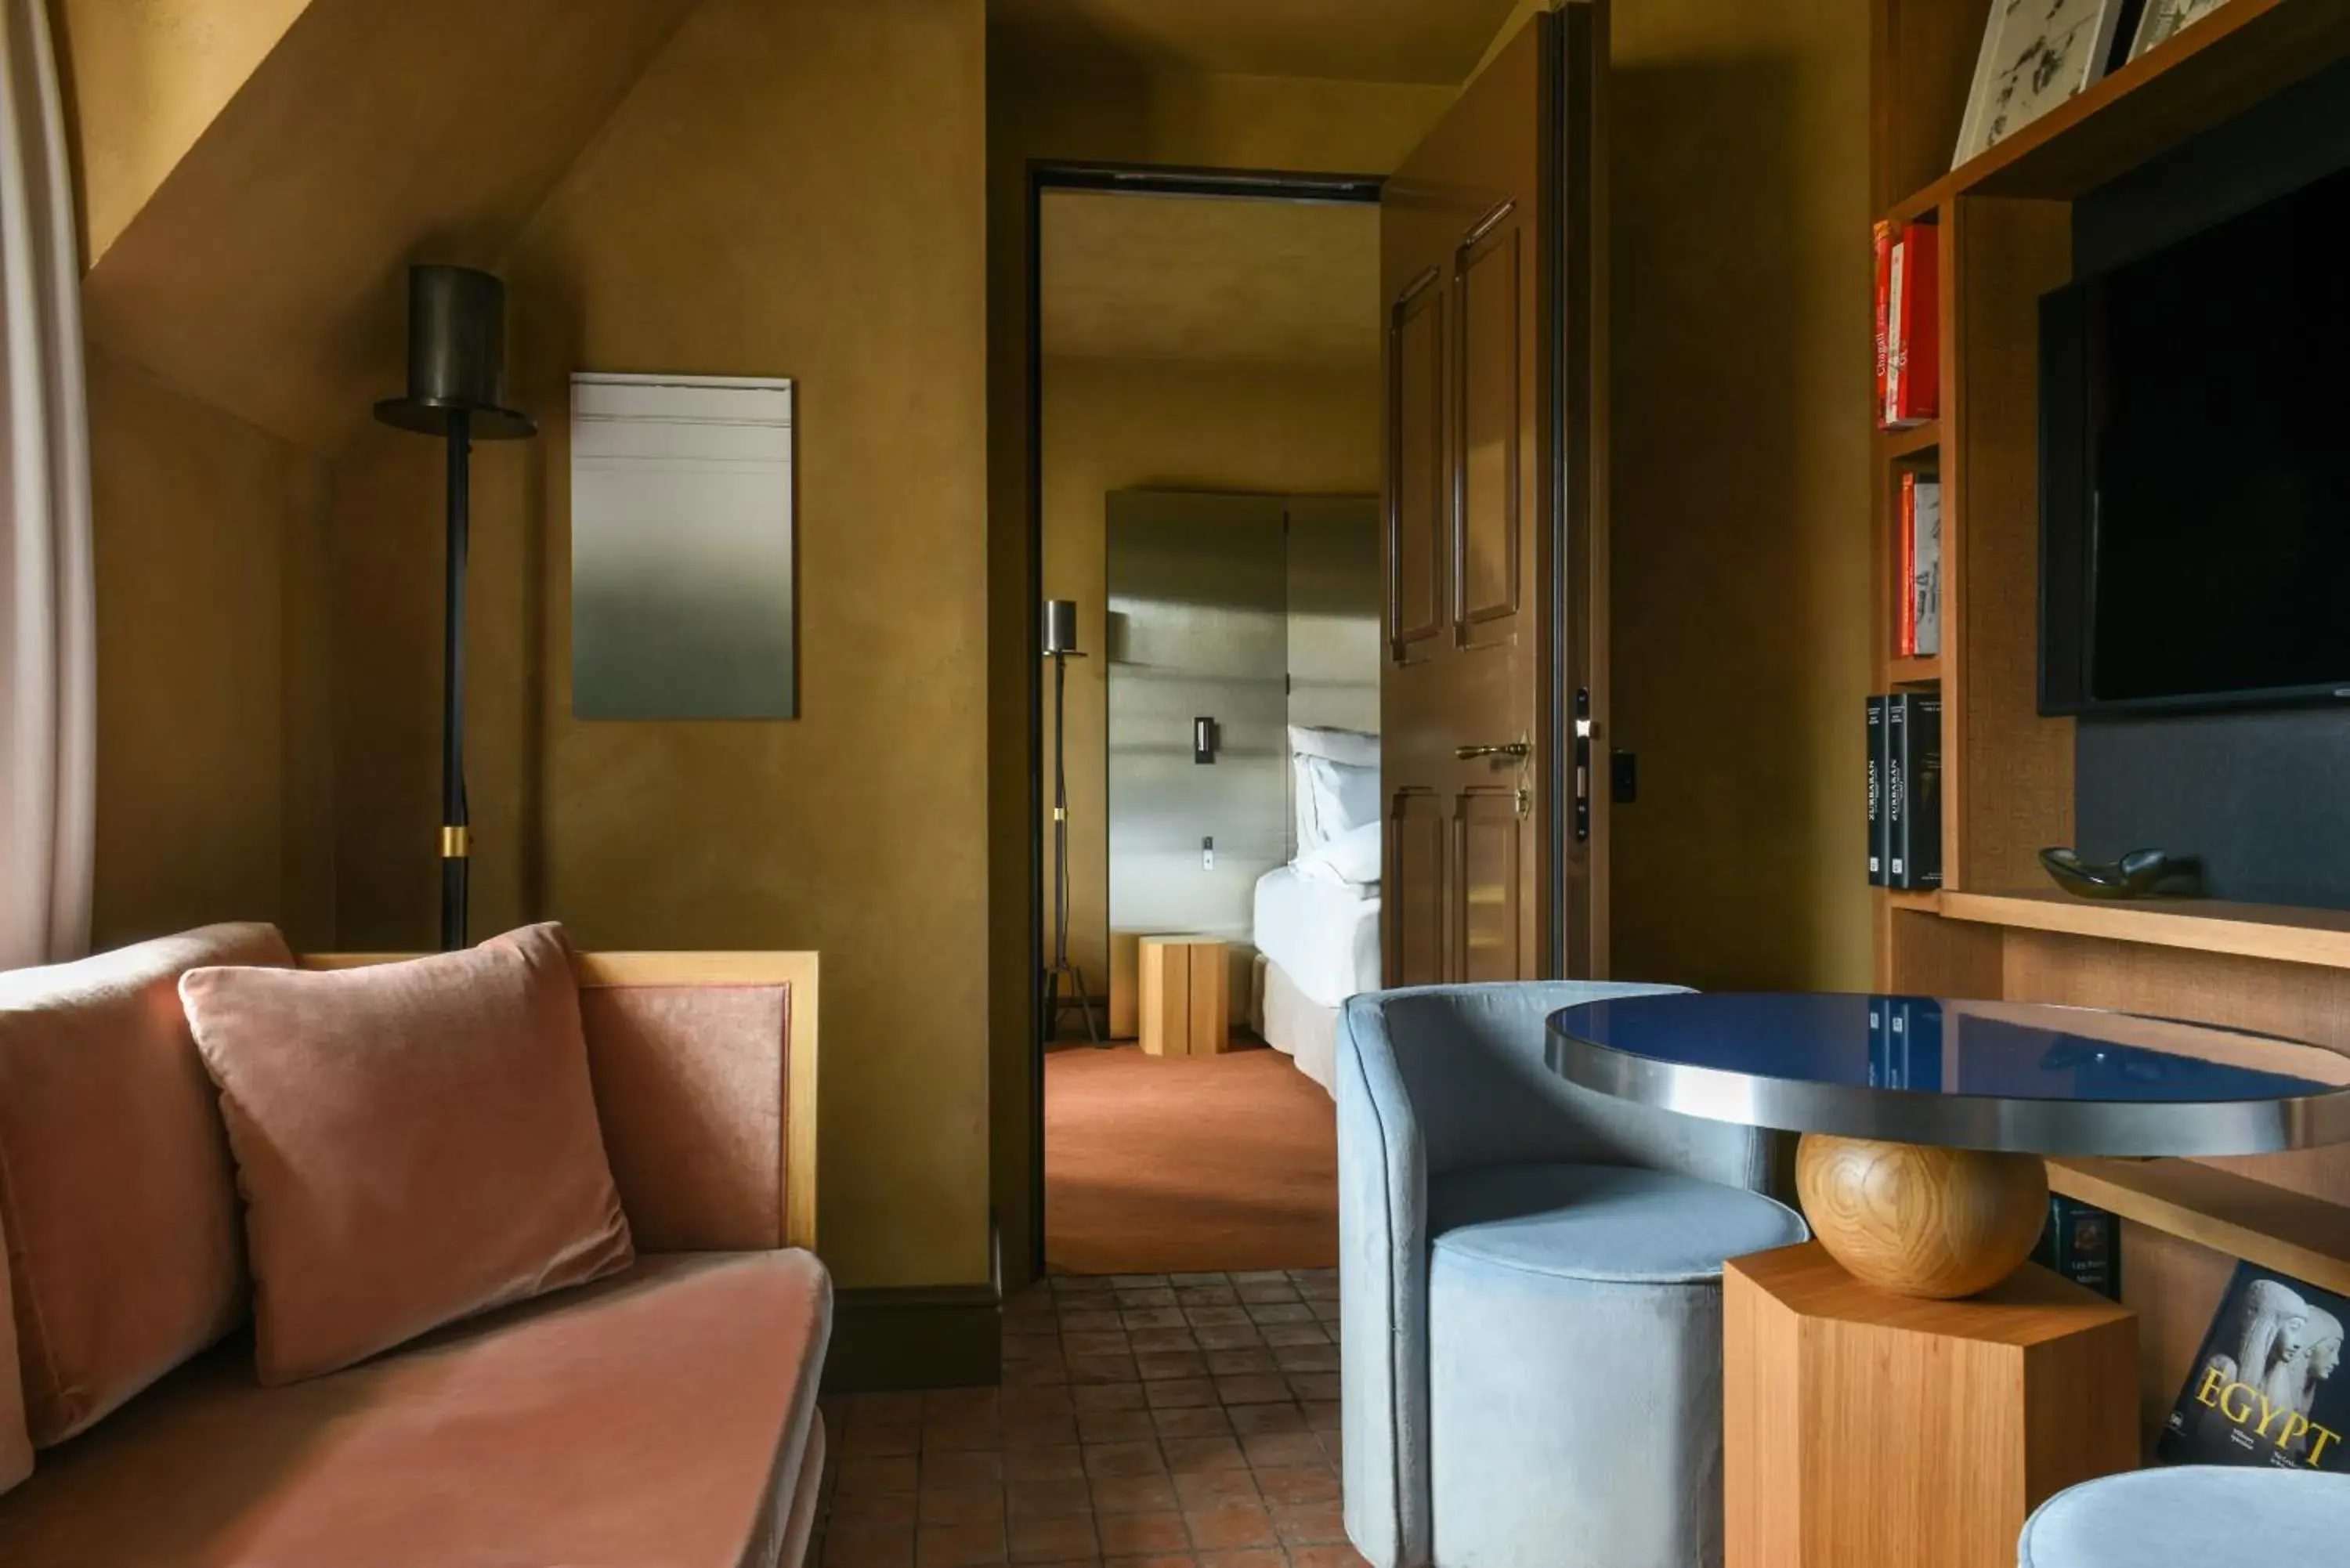 Dining area, Bathroom in Cour des Vosges